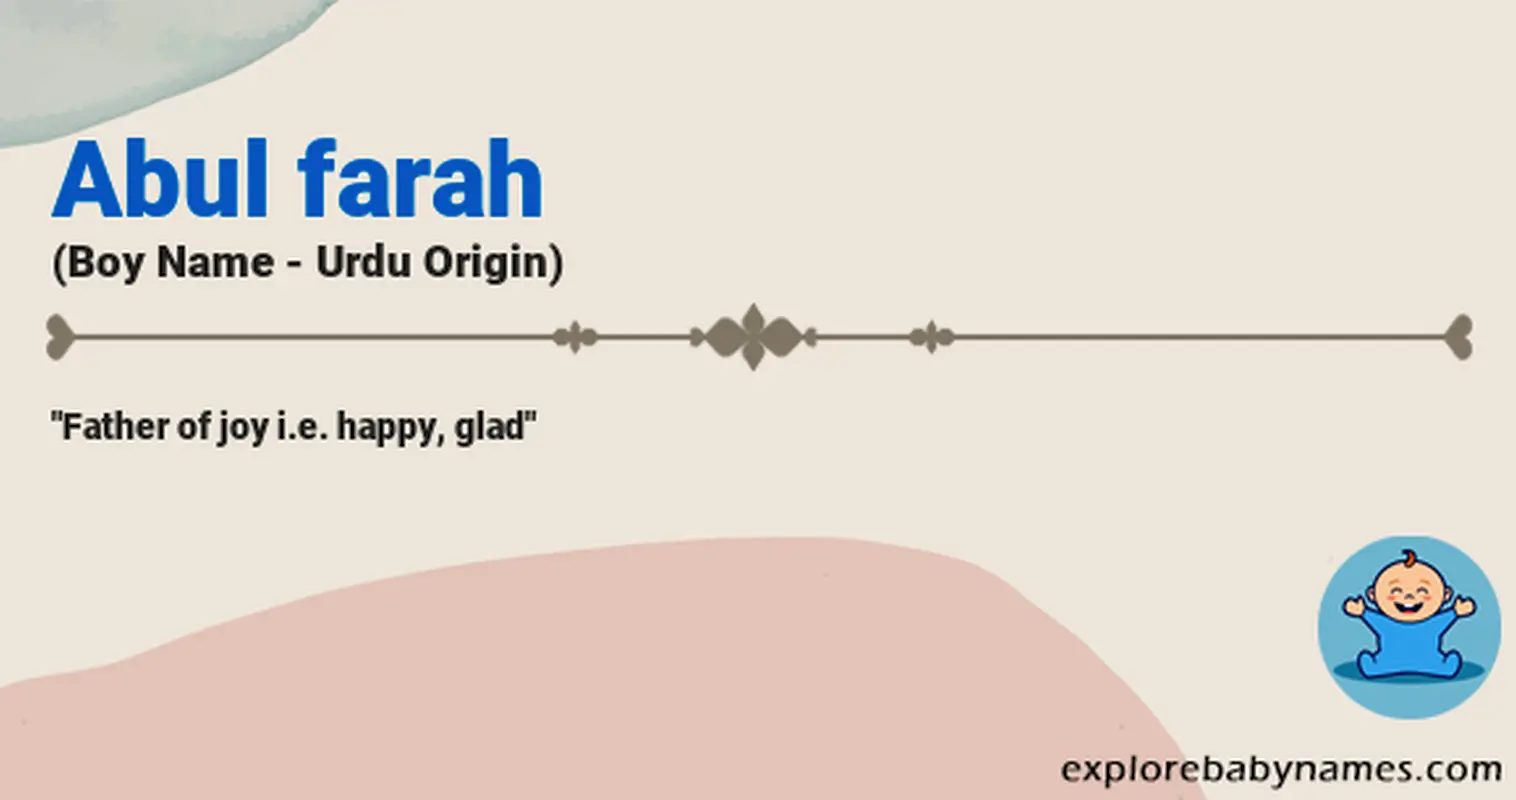 Meaning of Abul farah